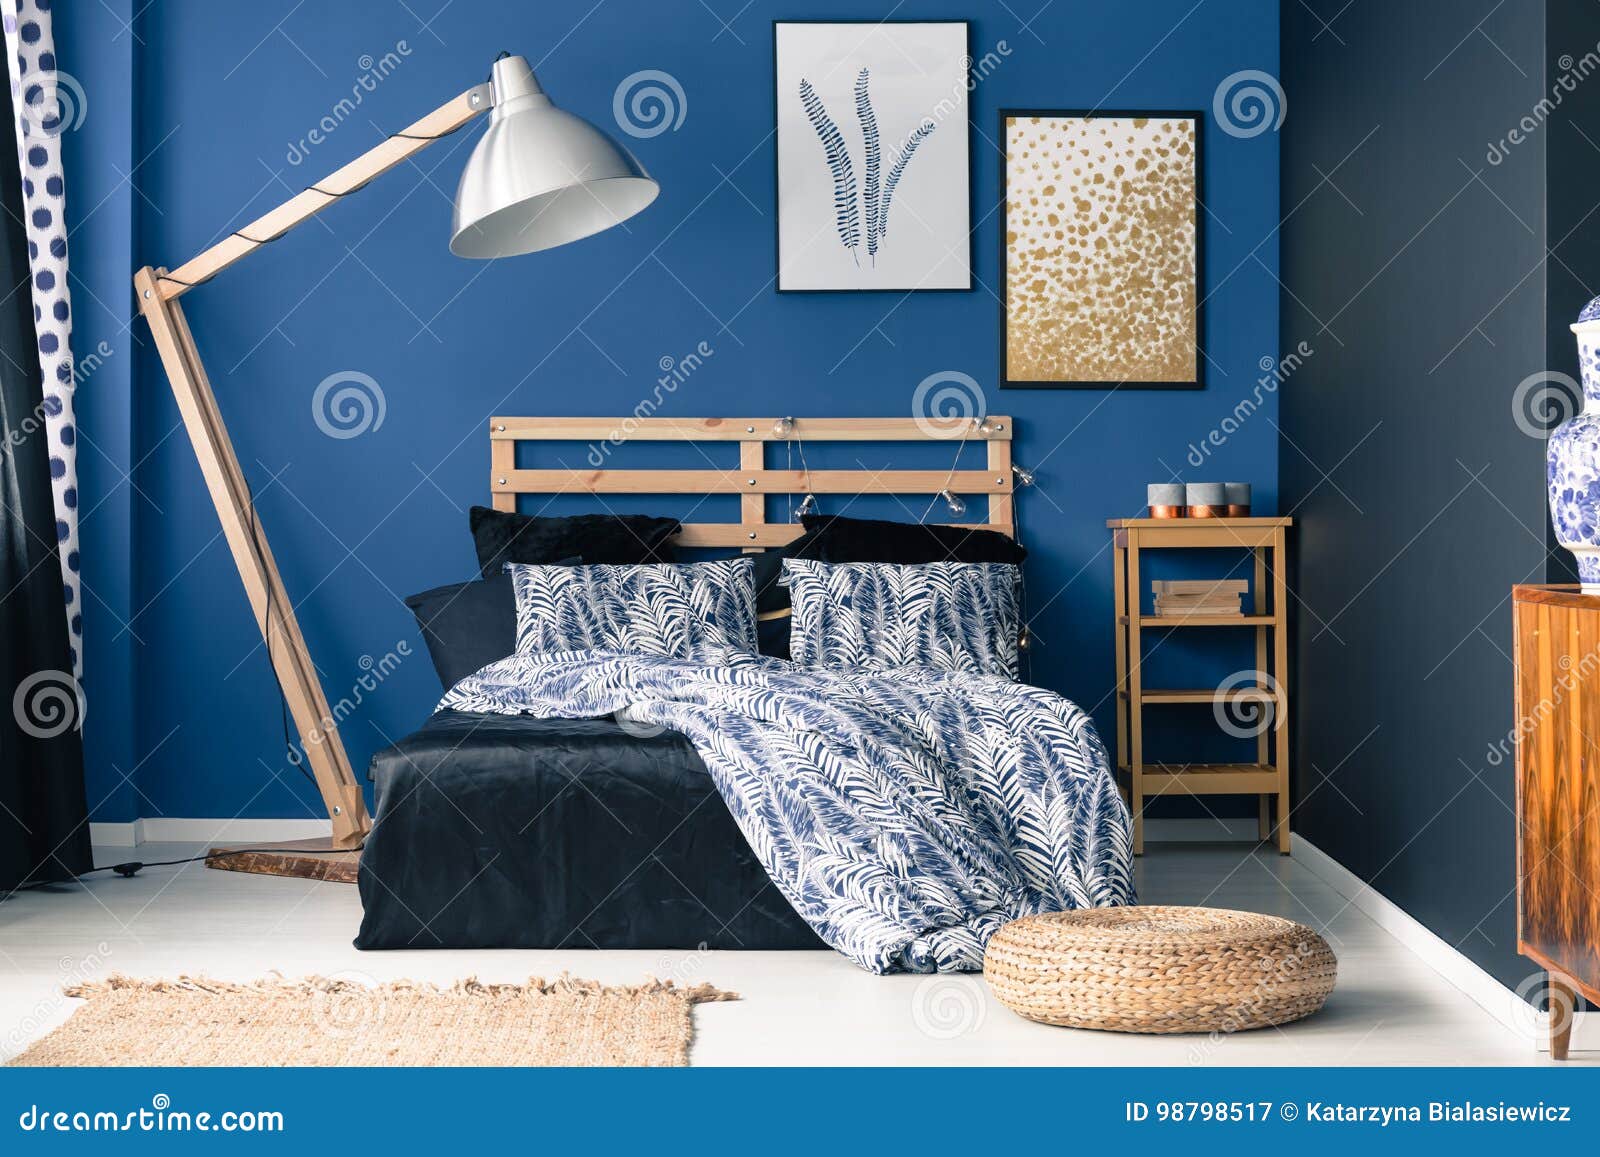 indigo tones in classy bedroom